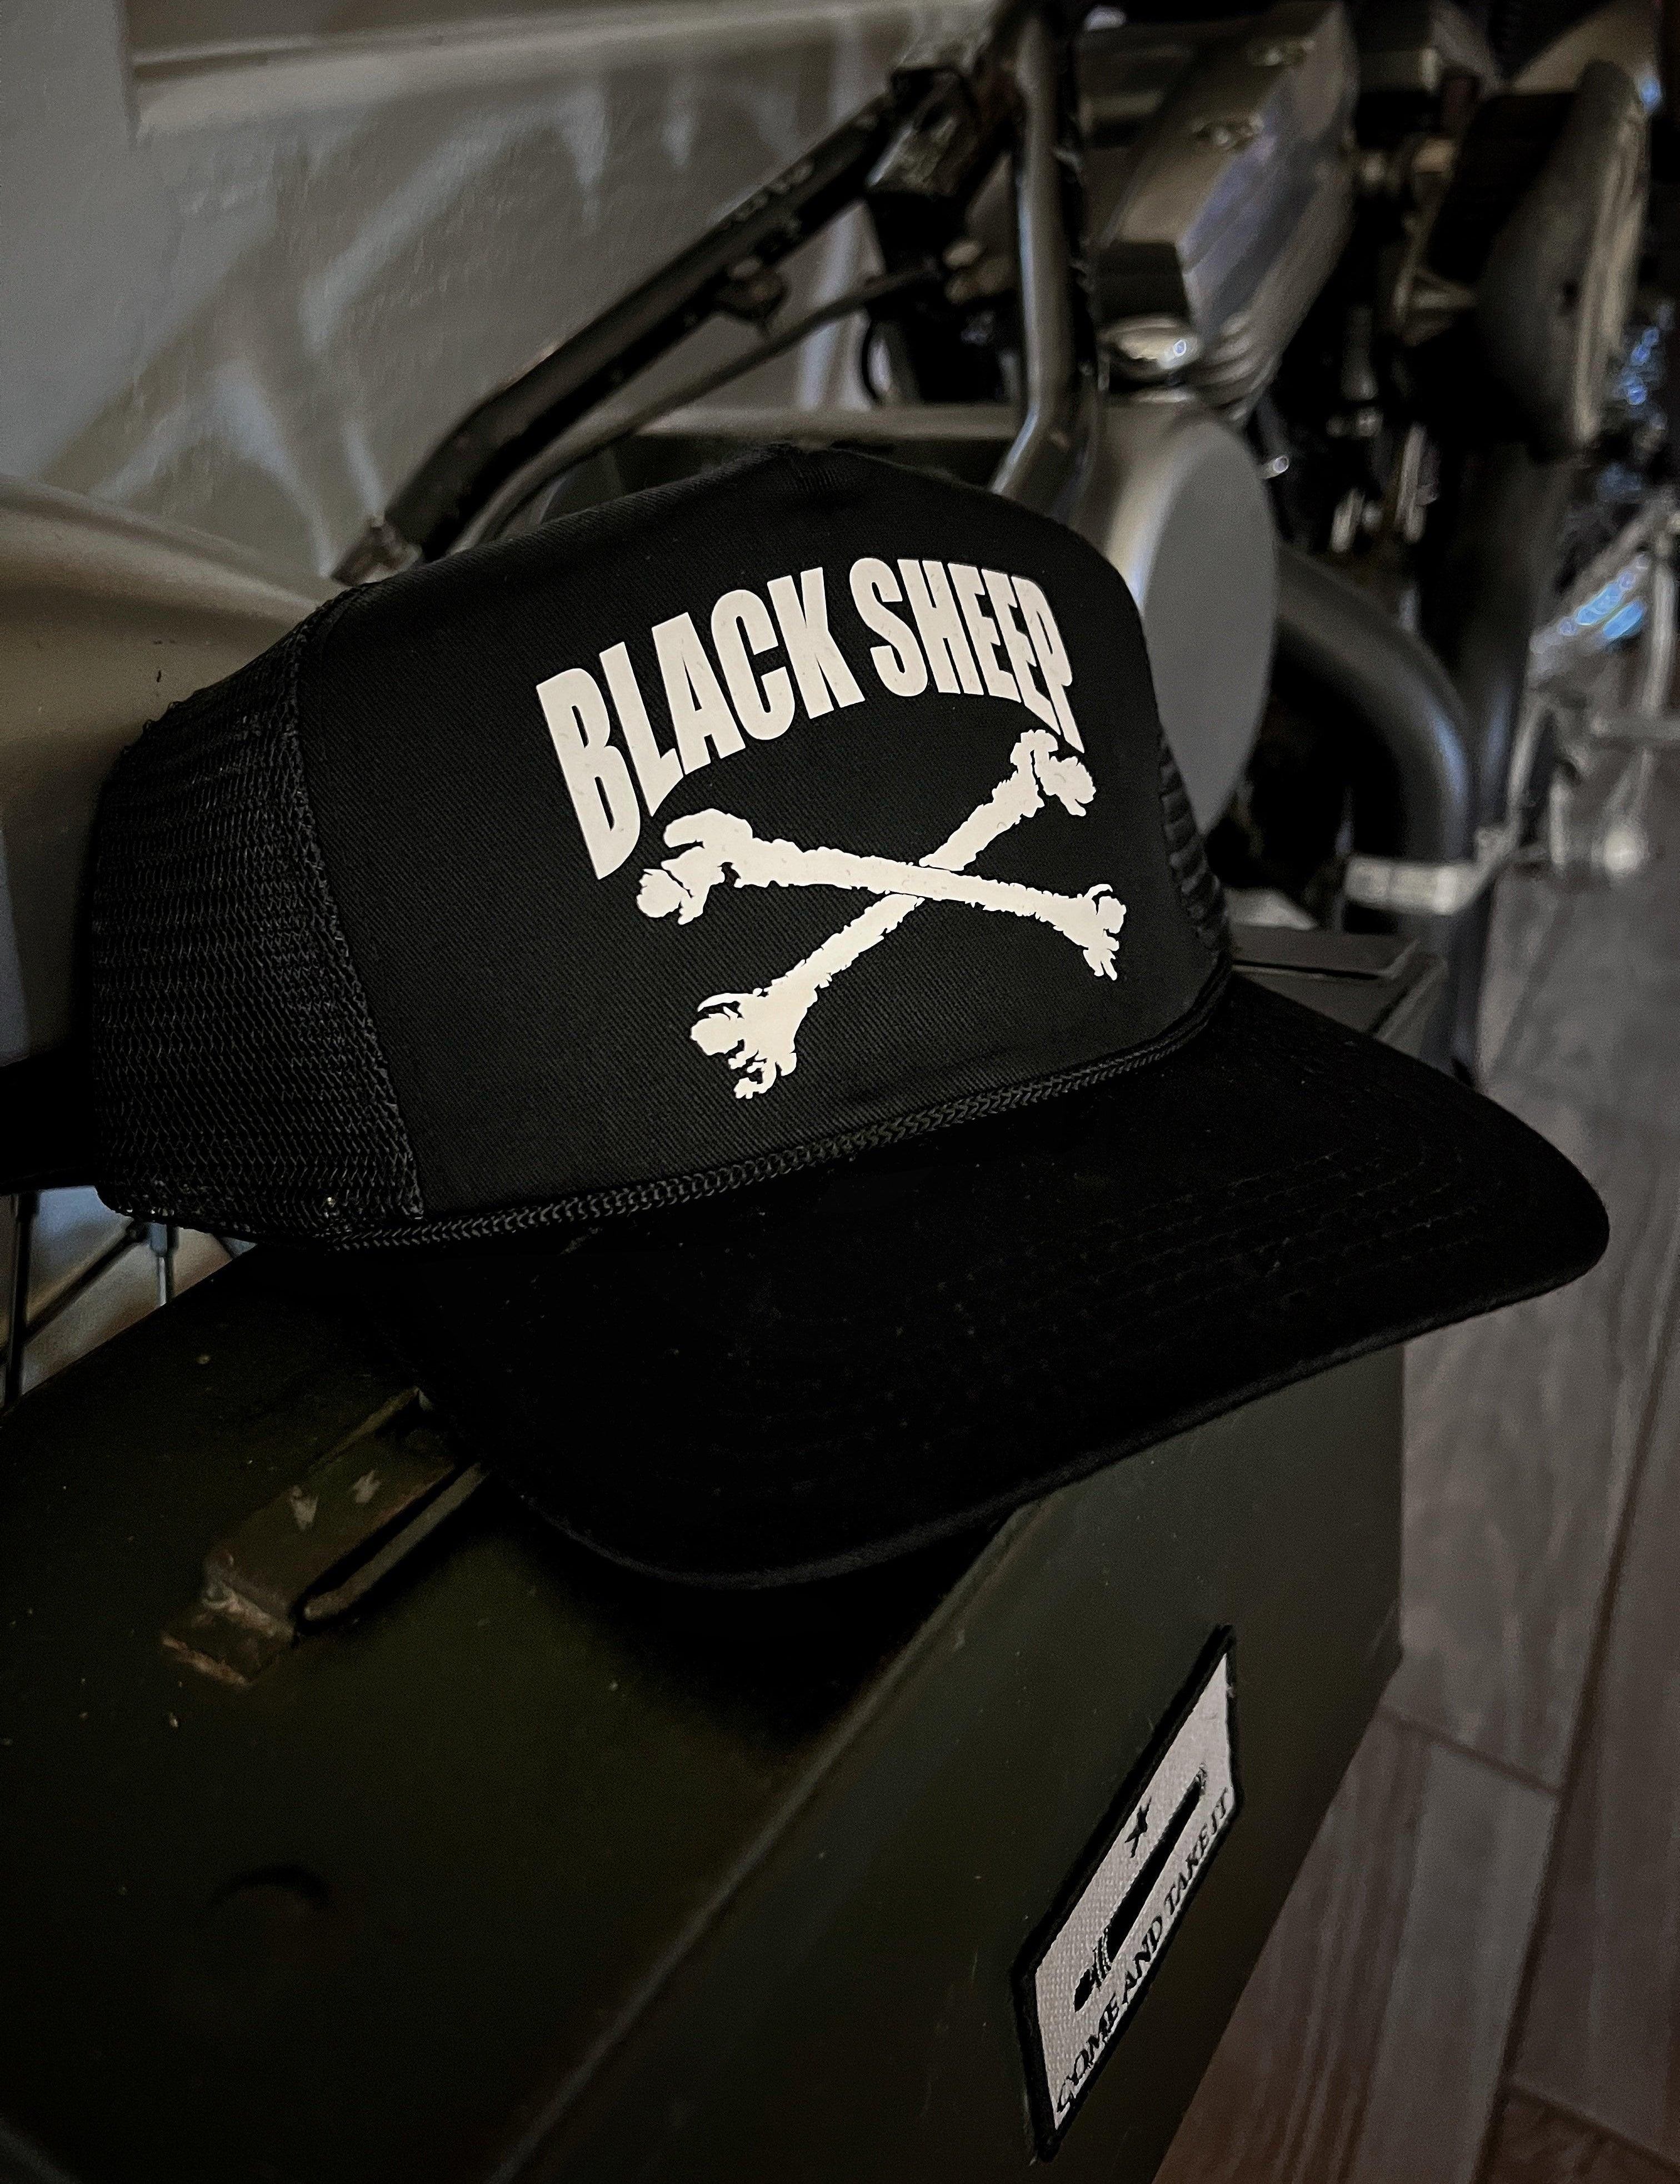 BLACKSHEEP BLACK HAT - The Drive Clothing